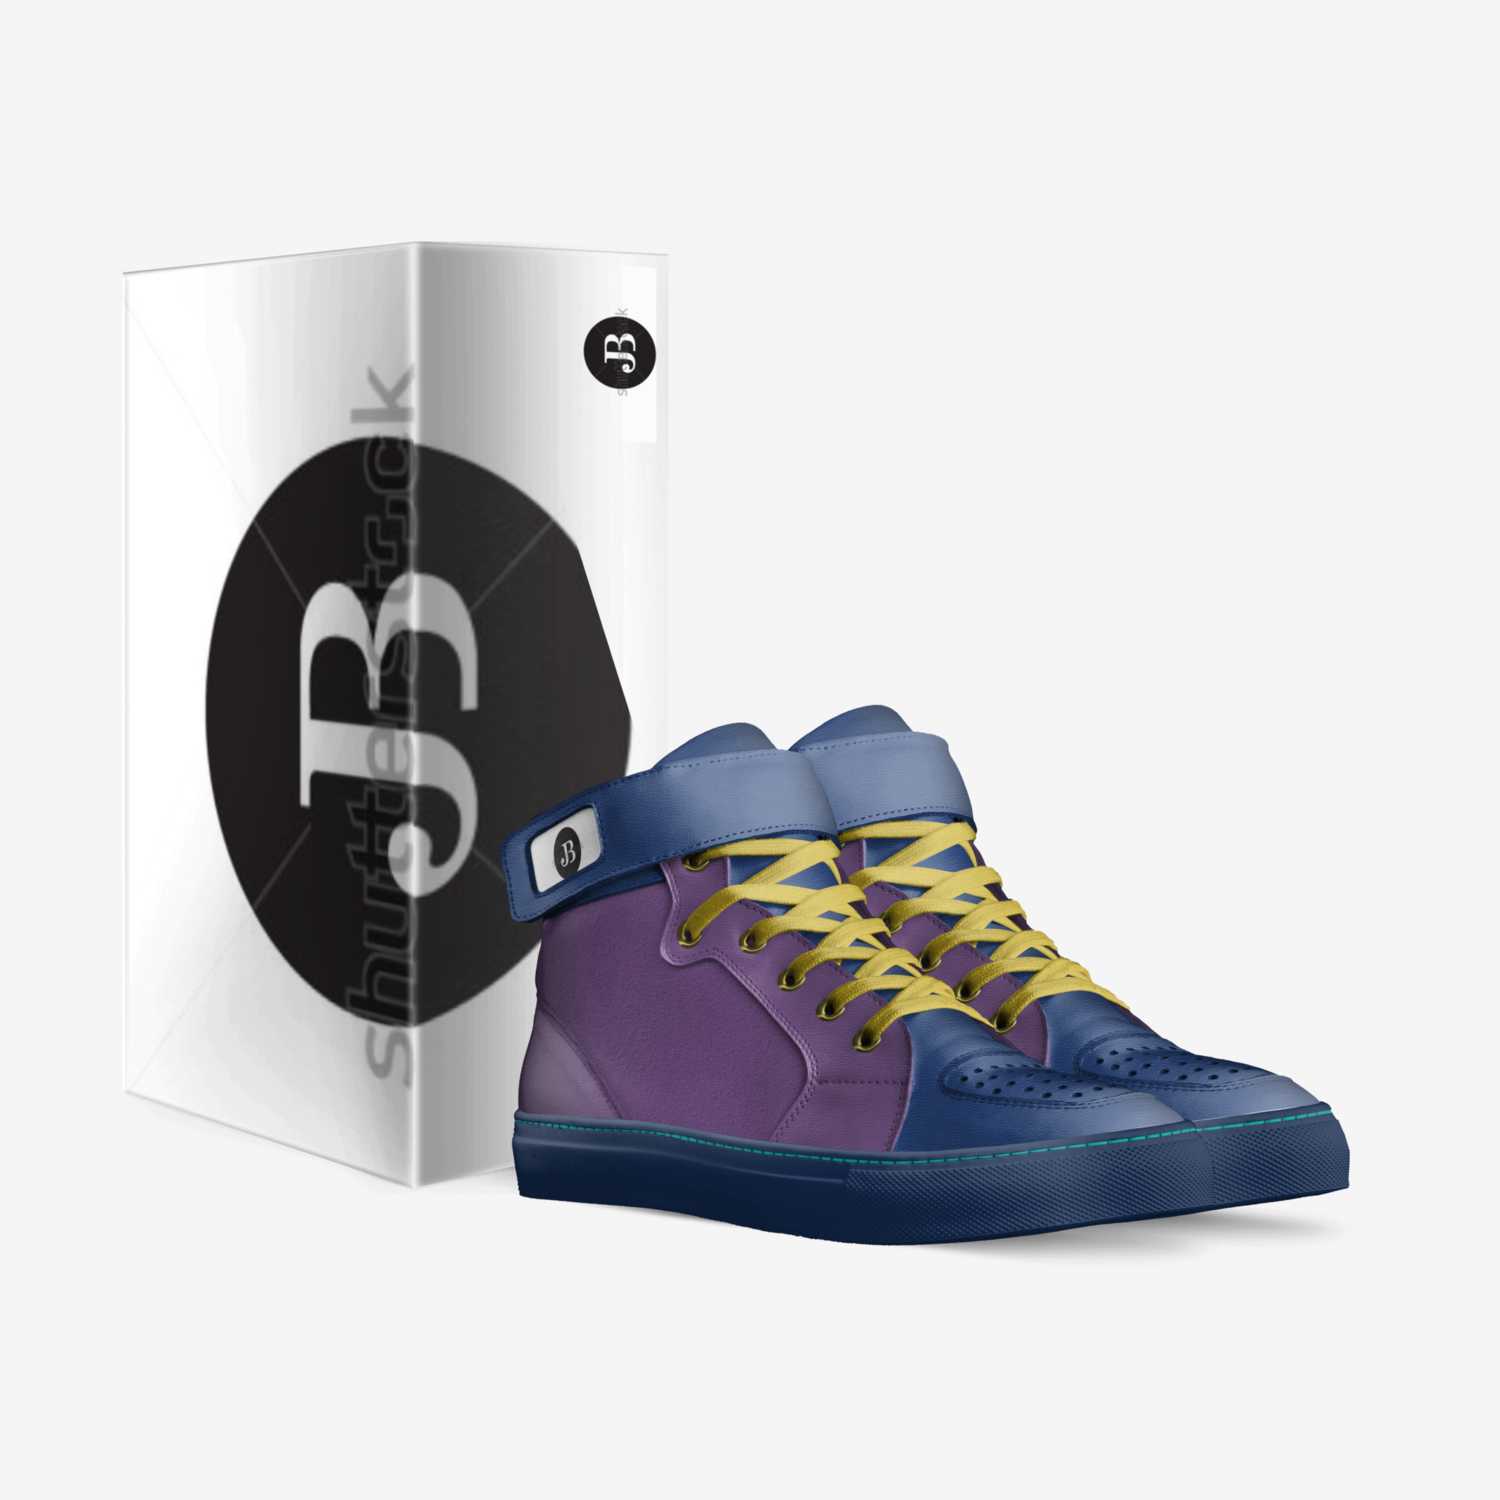 Justin Buchanan custom made in Italy shoes by Justin Buchanan | Box view